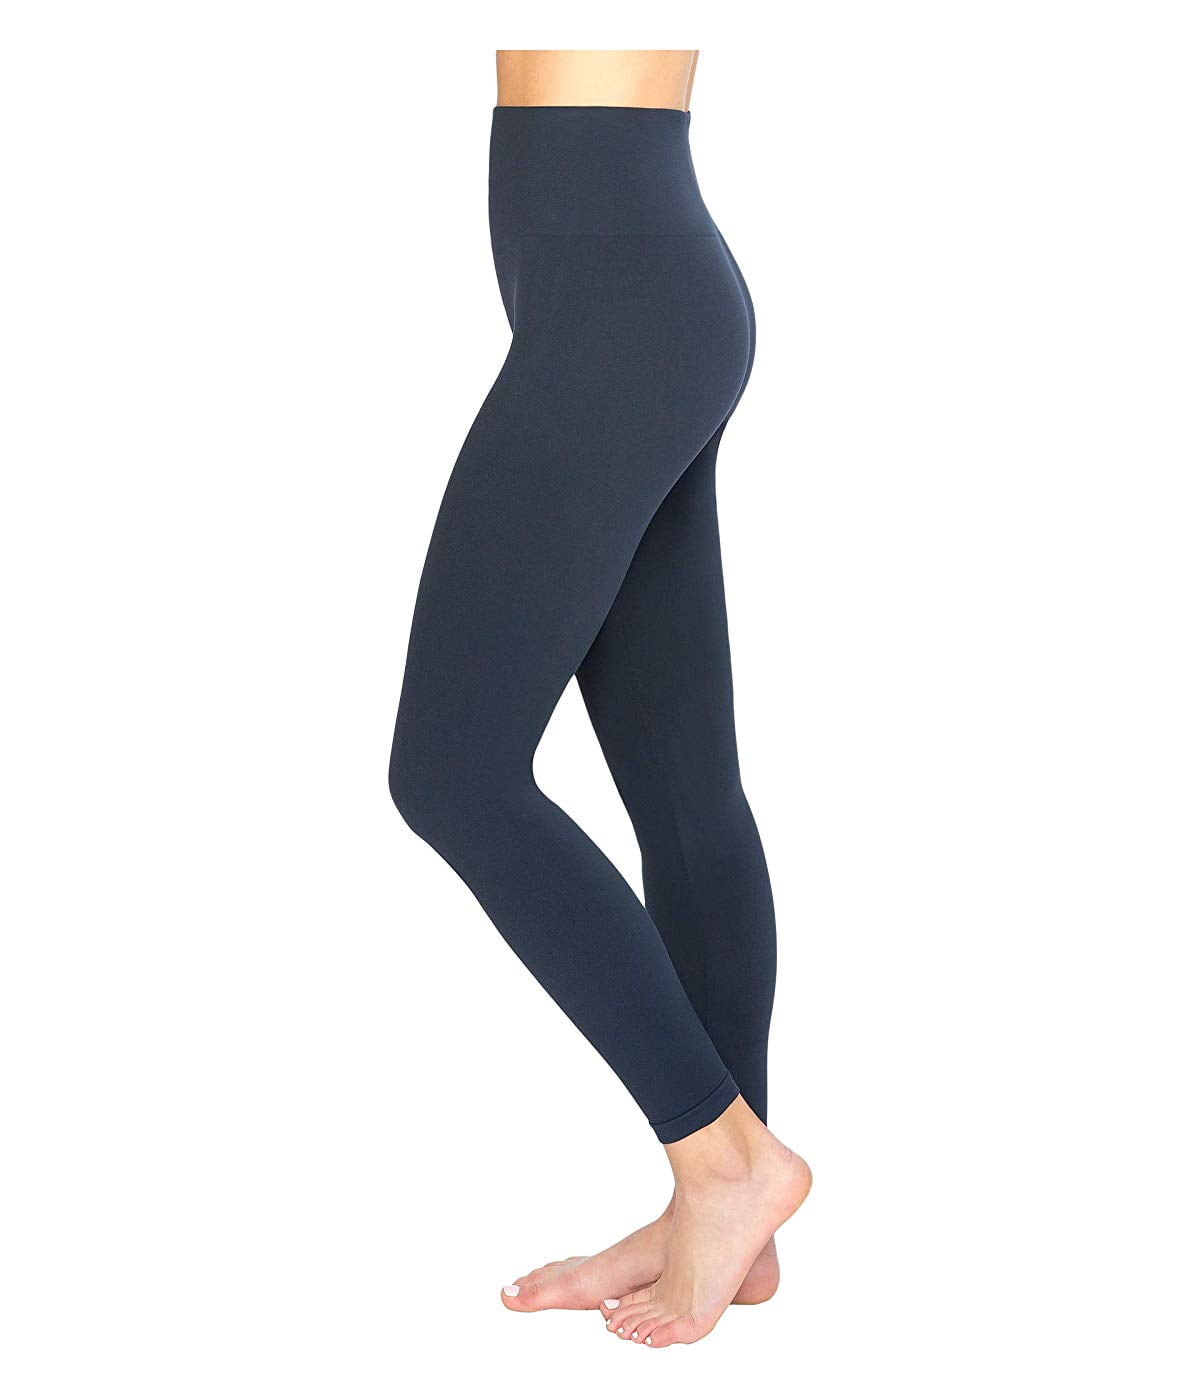 Hfyihgf Leggings for Women High Waist Tummy Control Yoga Pants